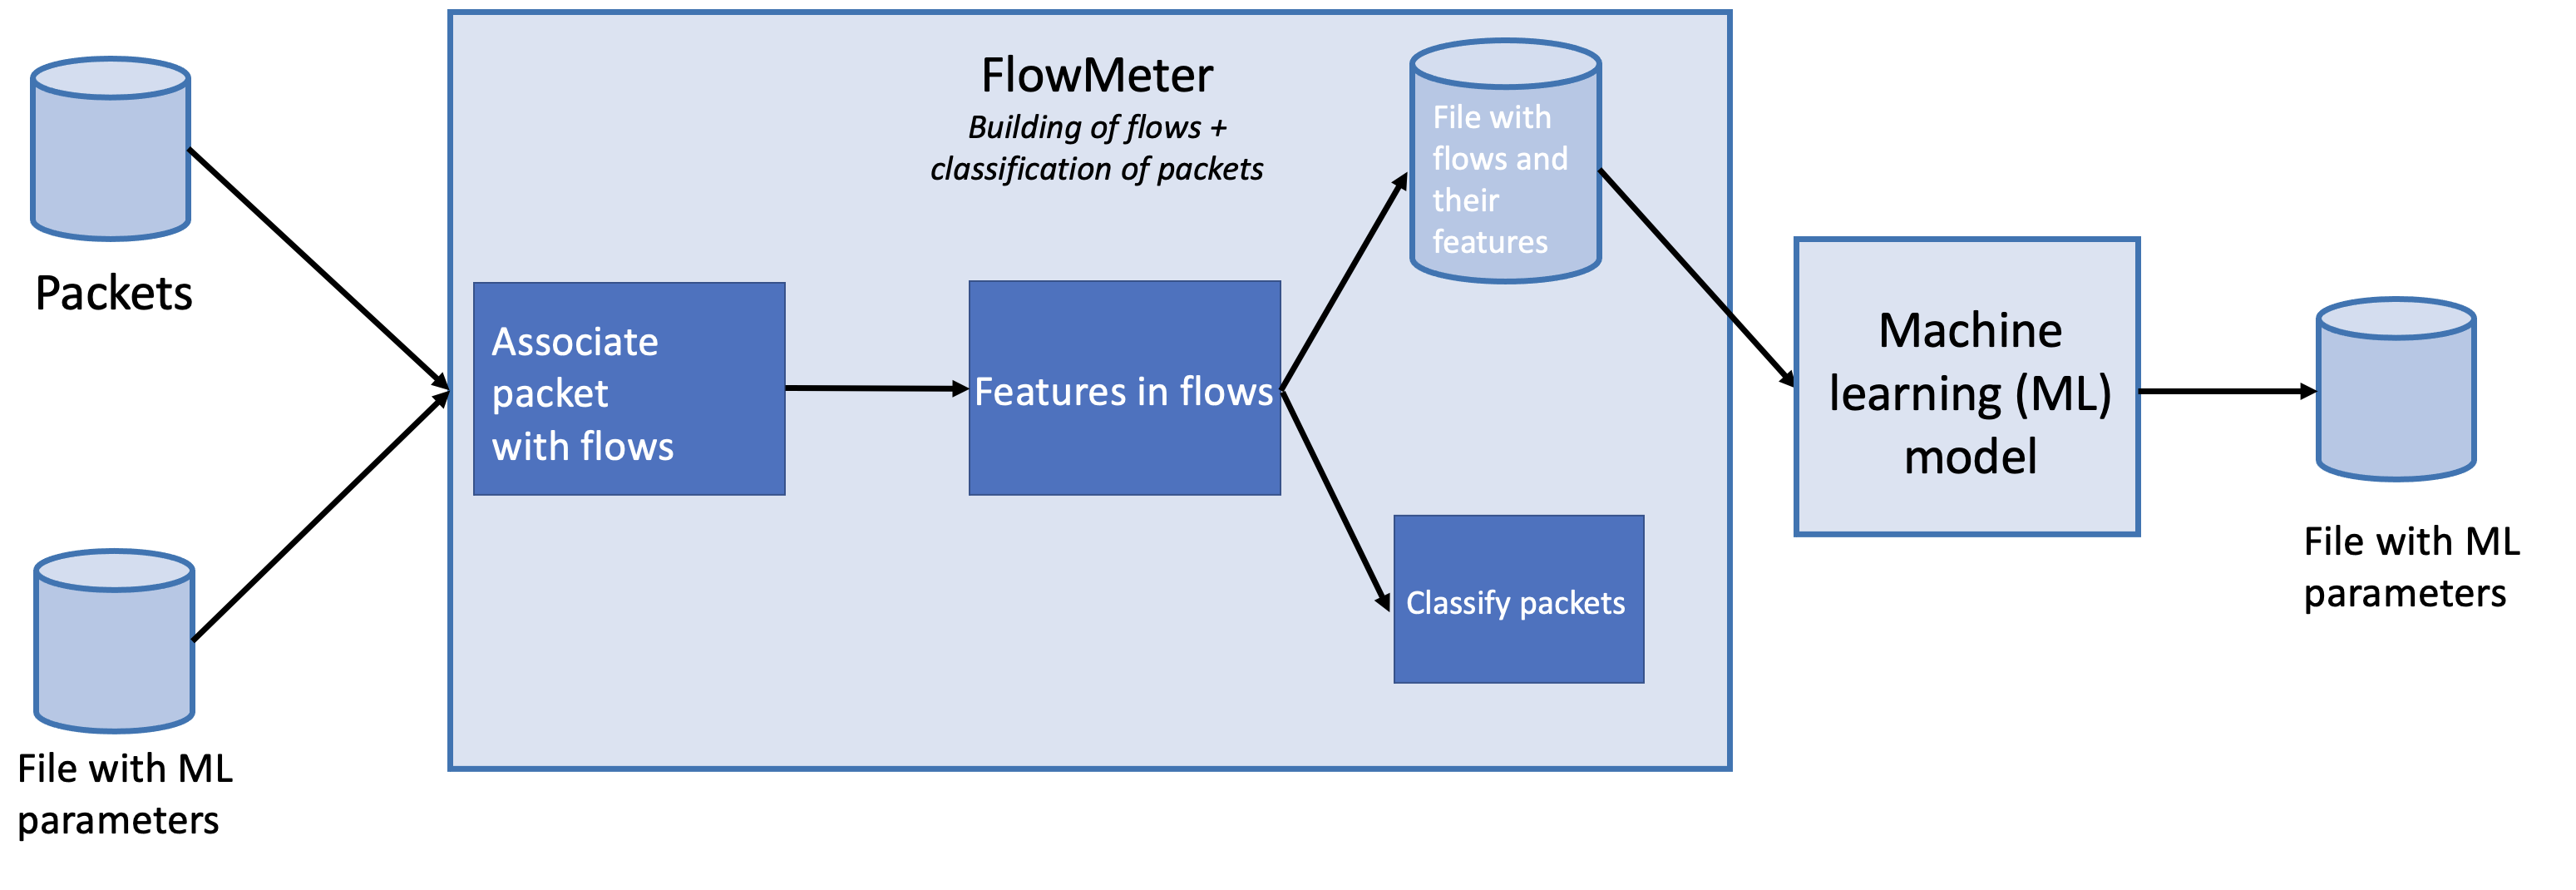 FlowMeter Classification